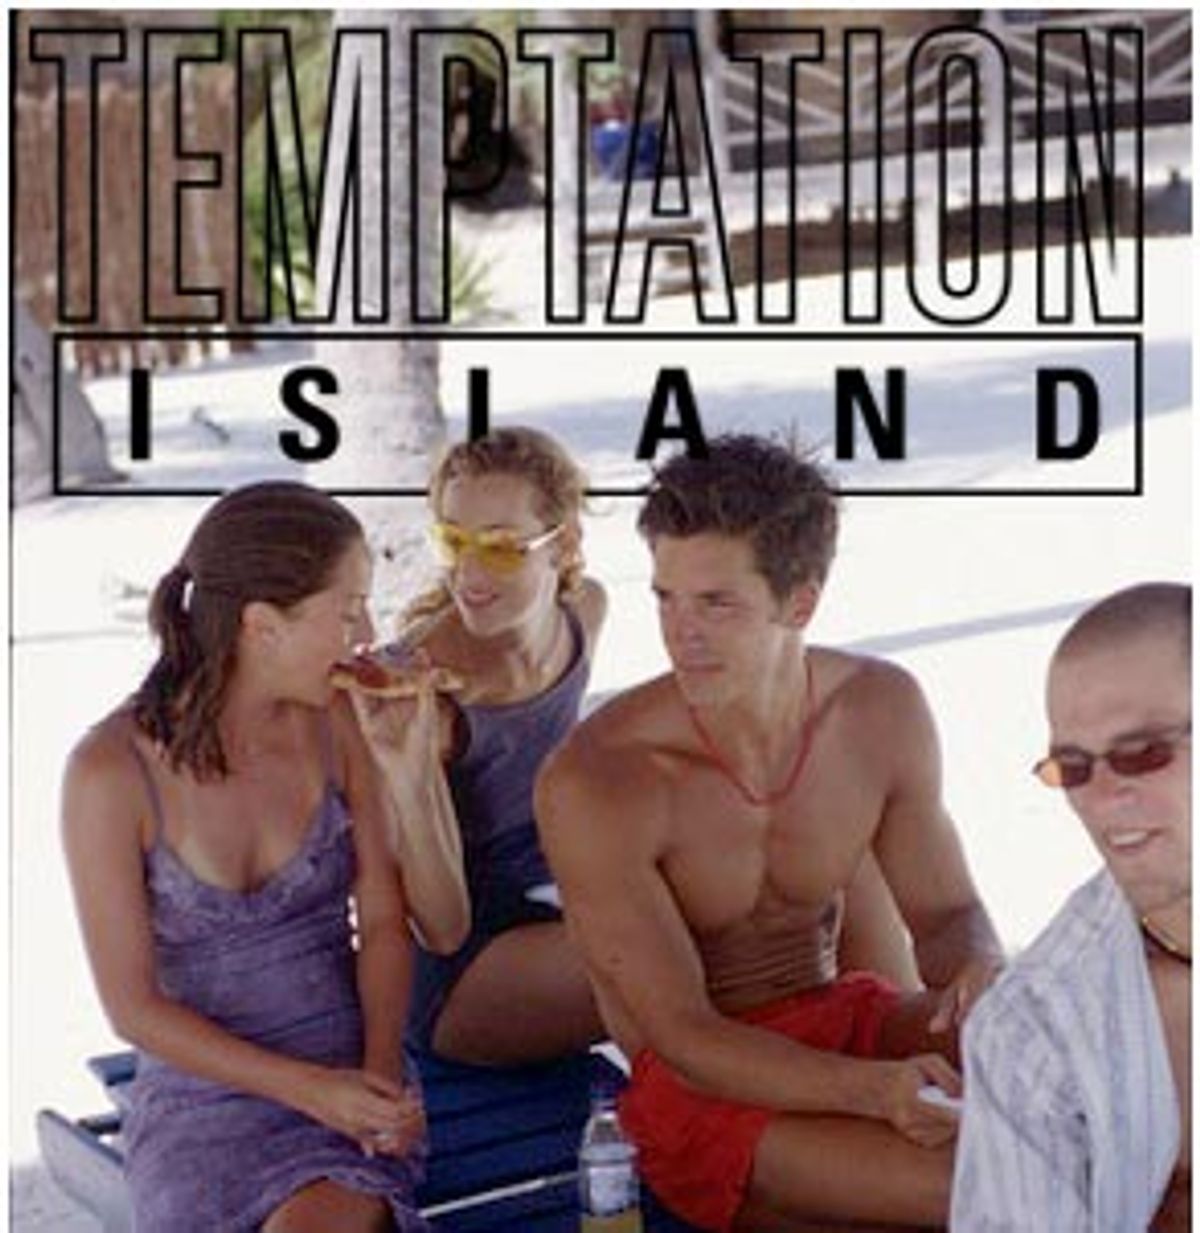 Naked temptation island Love Island’s